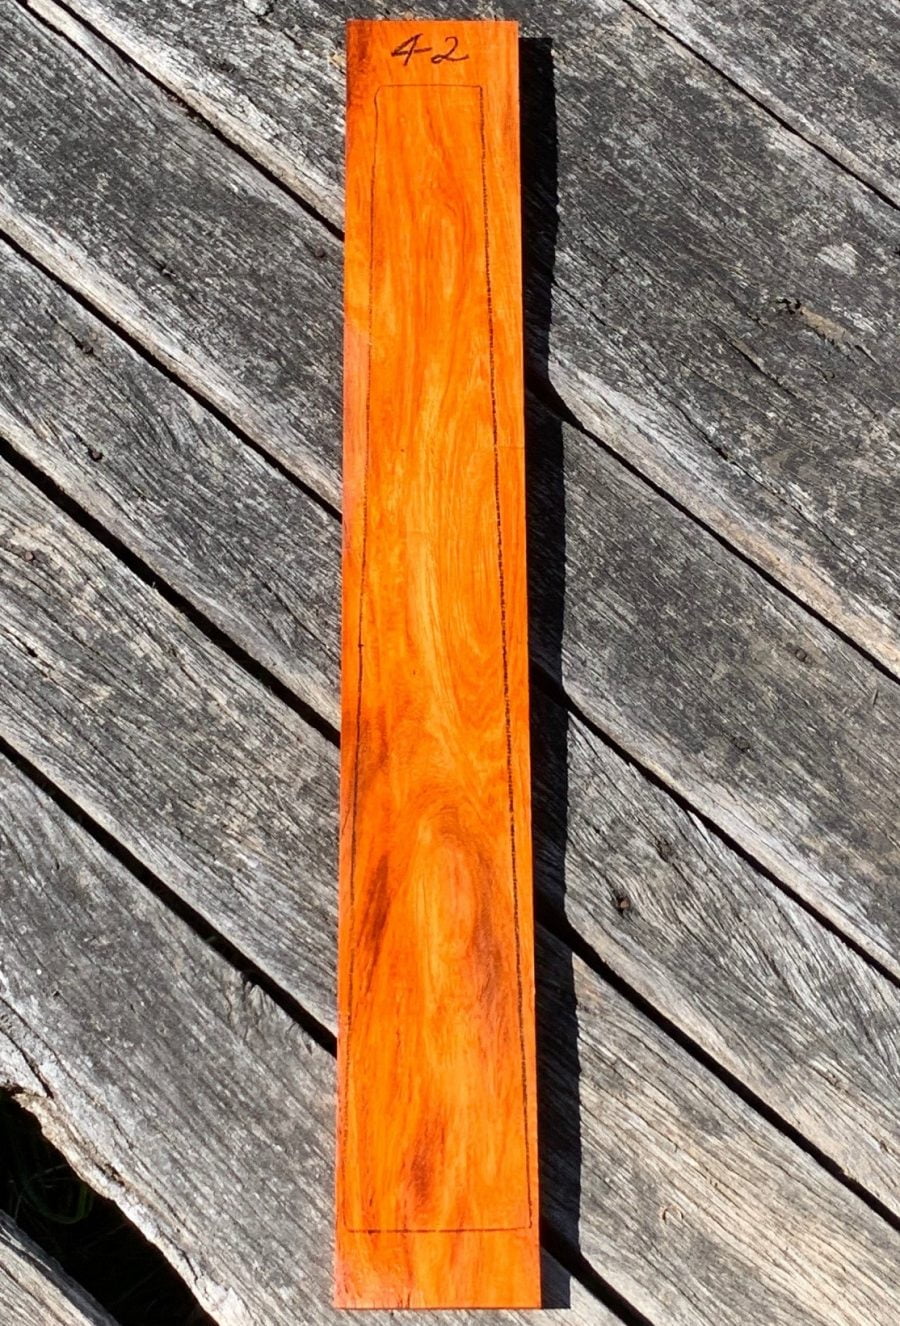 Guitar Fretboard timber